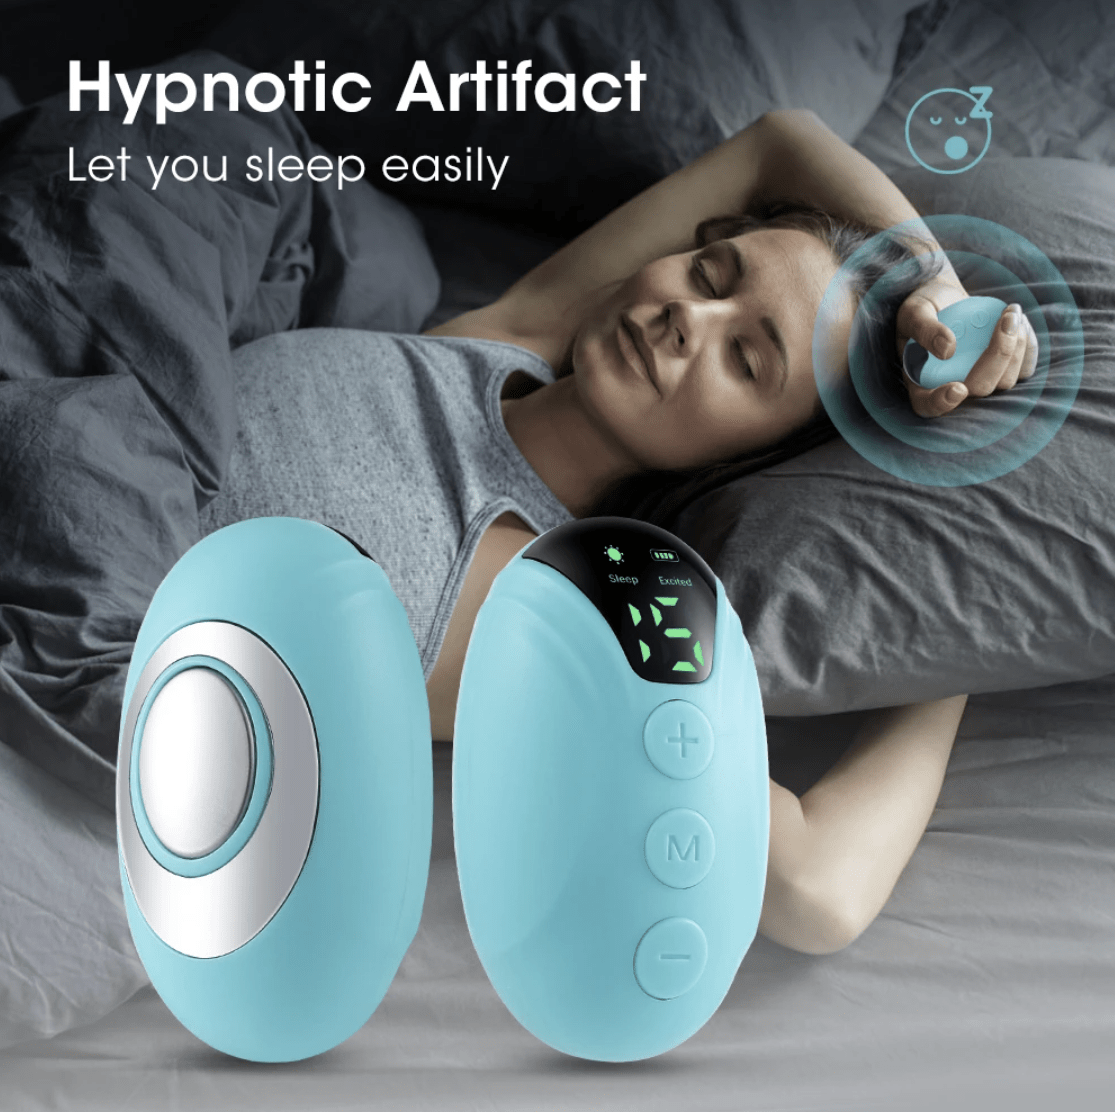 Handheld Sleep Hypnosis Device